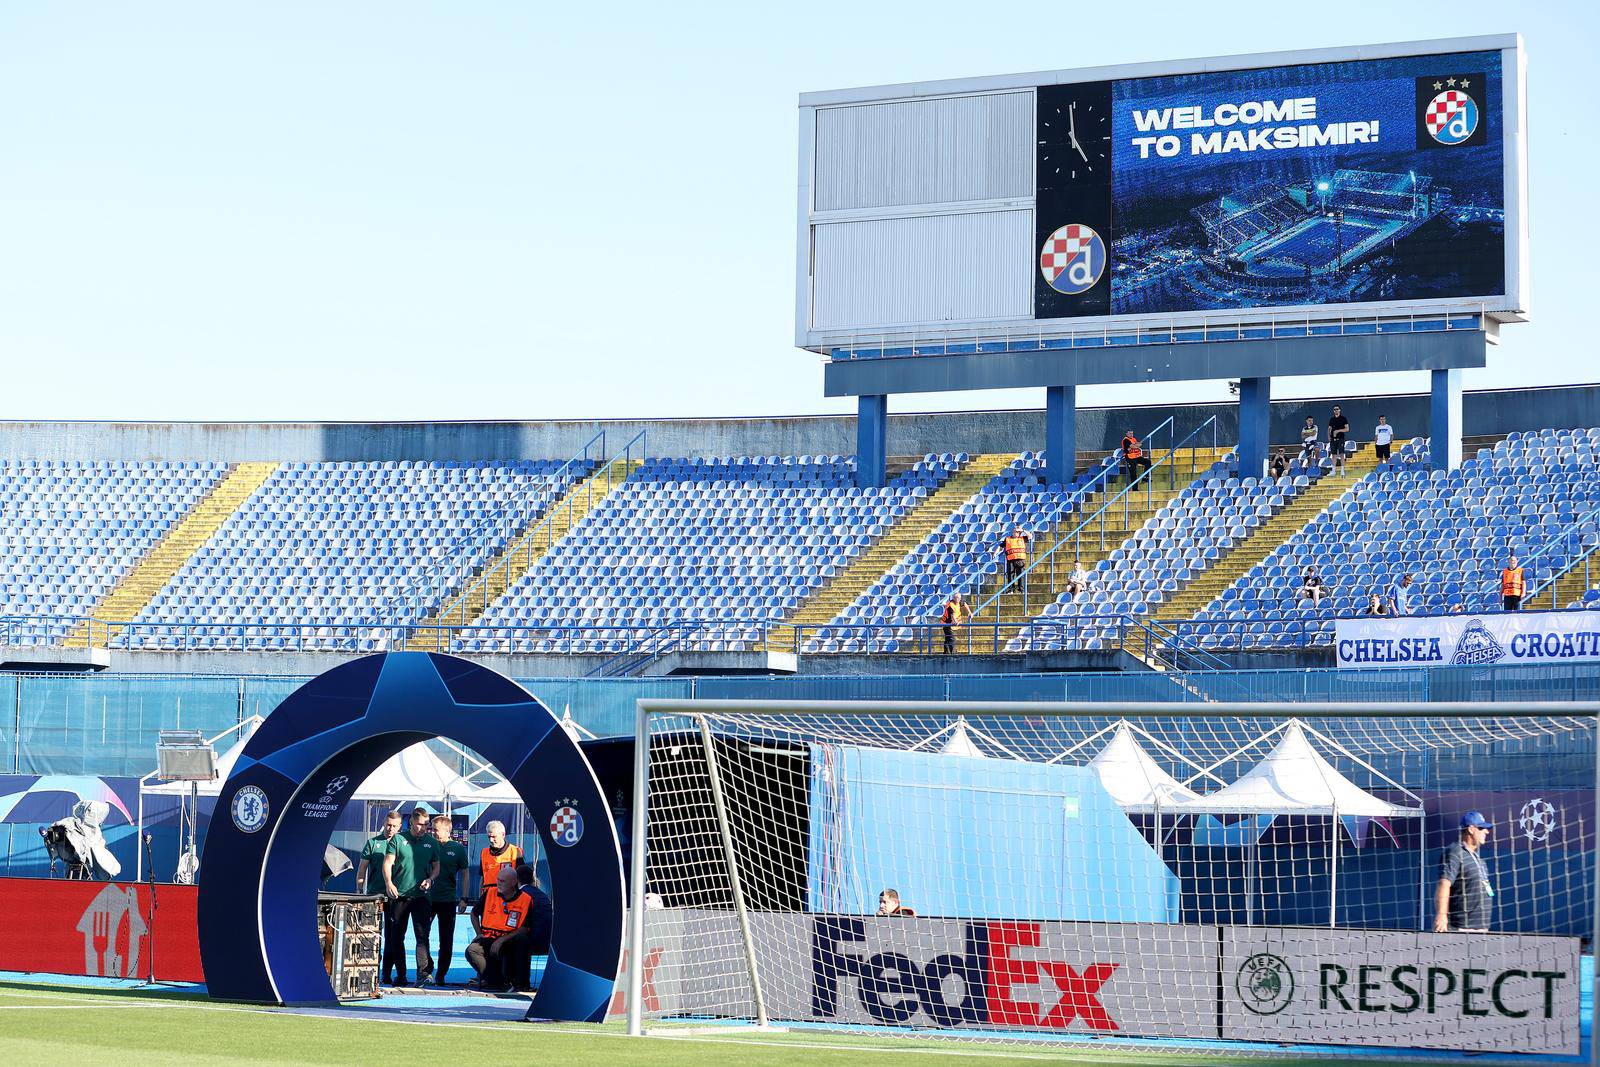 Kadrovi s maksimirskog stadiona uoči početka utakmice Dinamo - Chelsea 